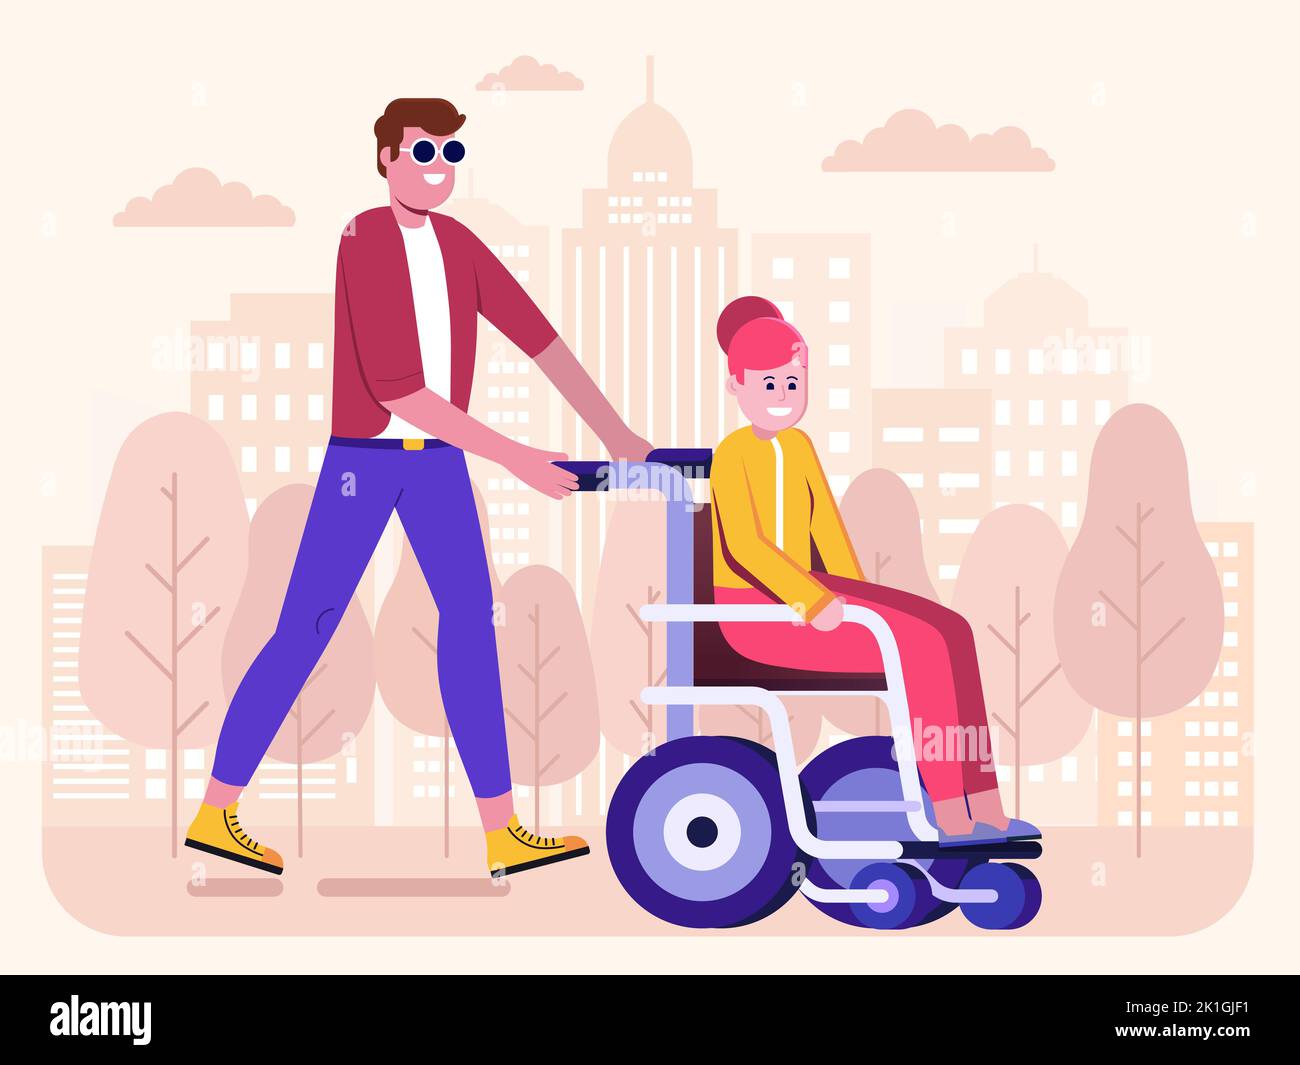 Cartoon Man Pushing Disabled Woman on Wheelchair Stock Vector